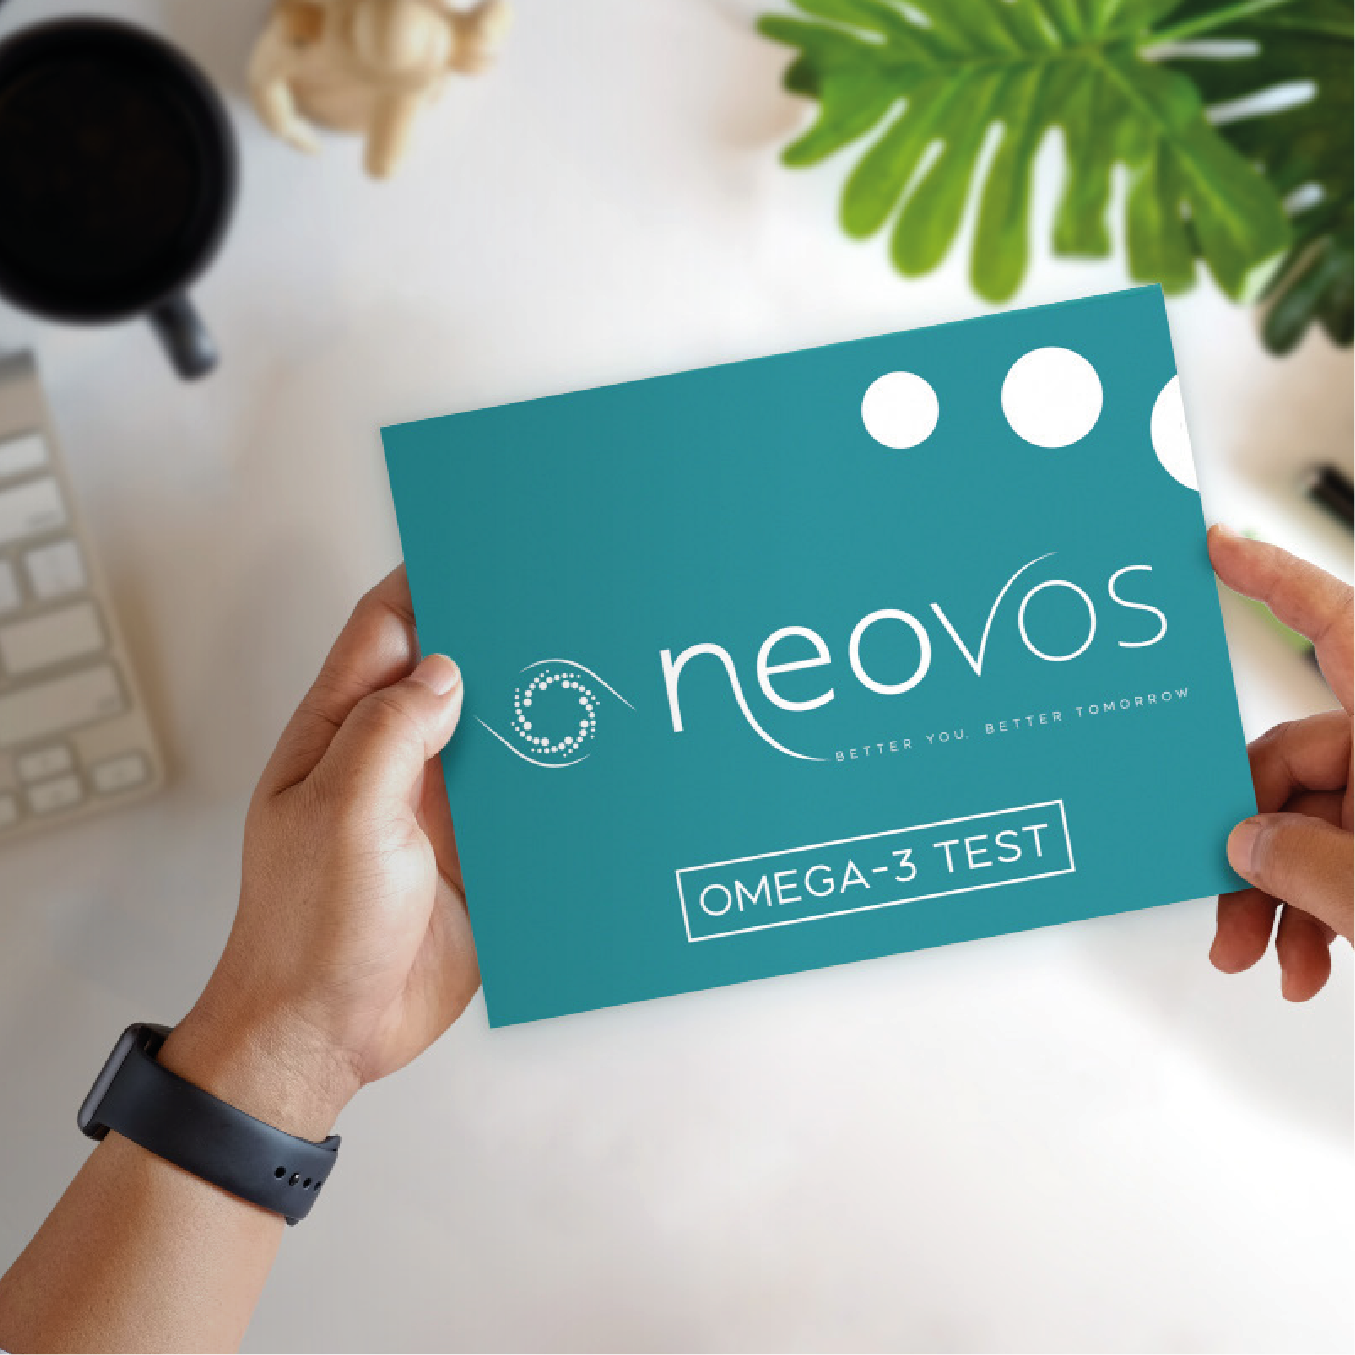 NeoVos | Omega 3 Test | SureScreen Scientifics for Health